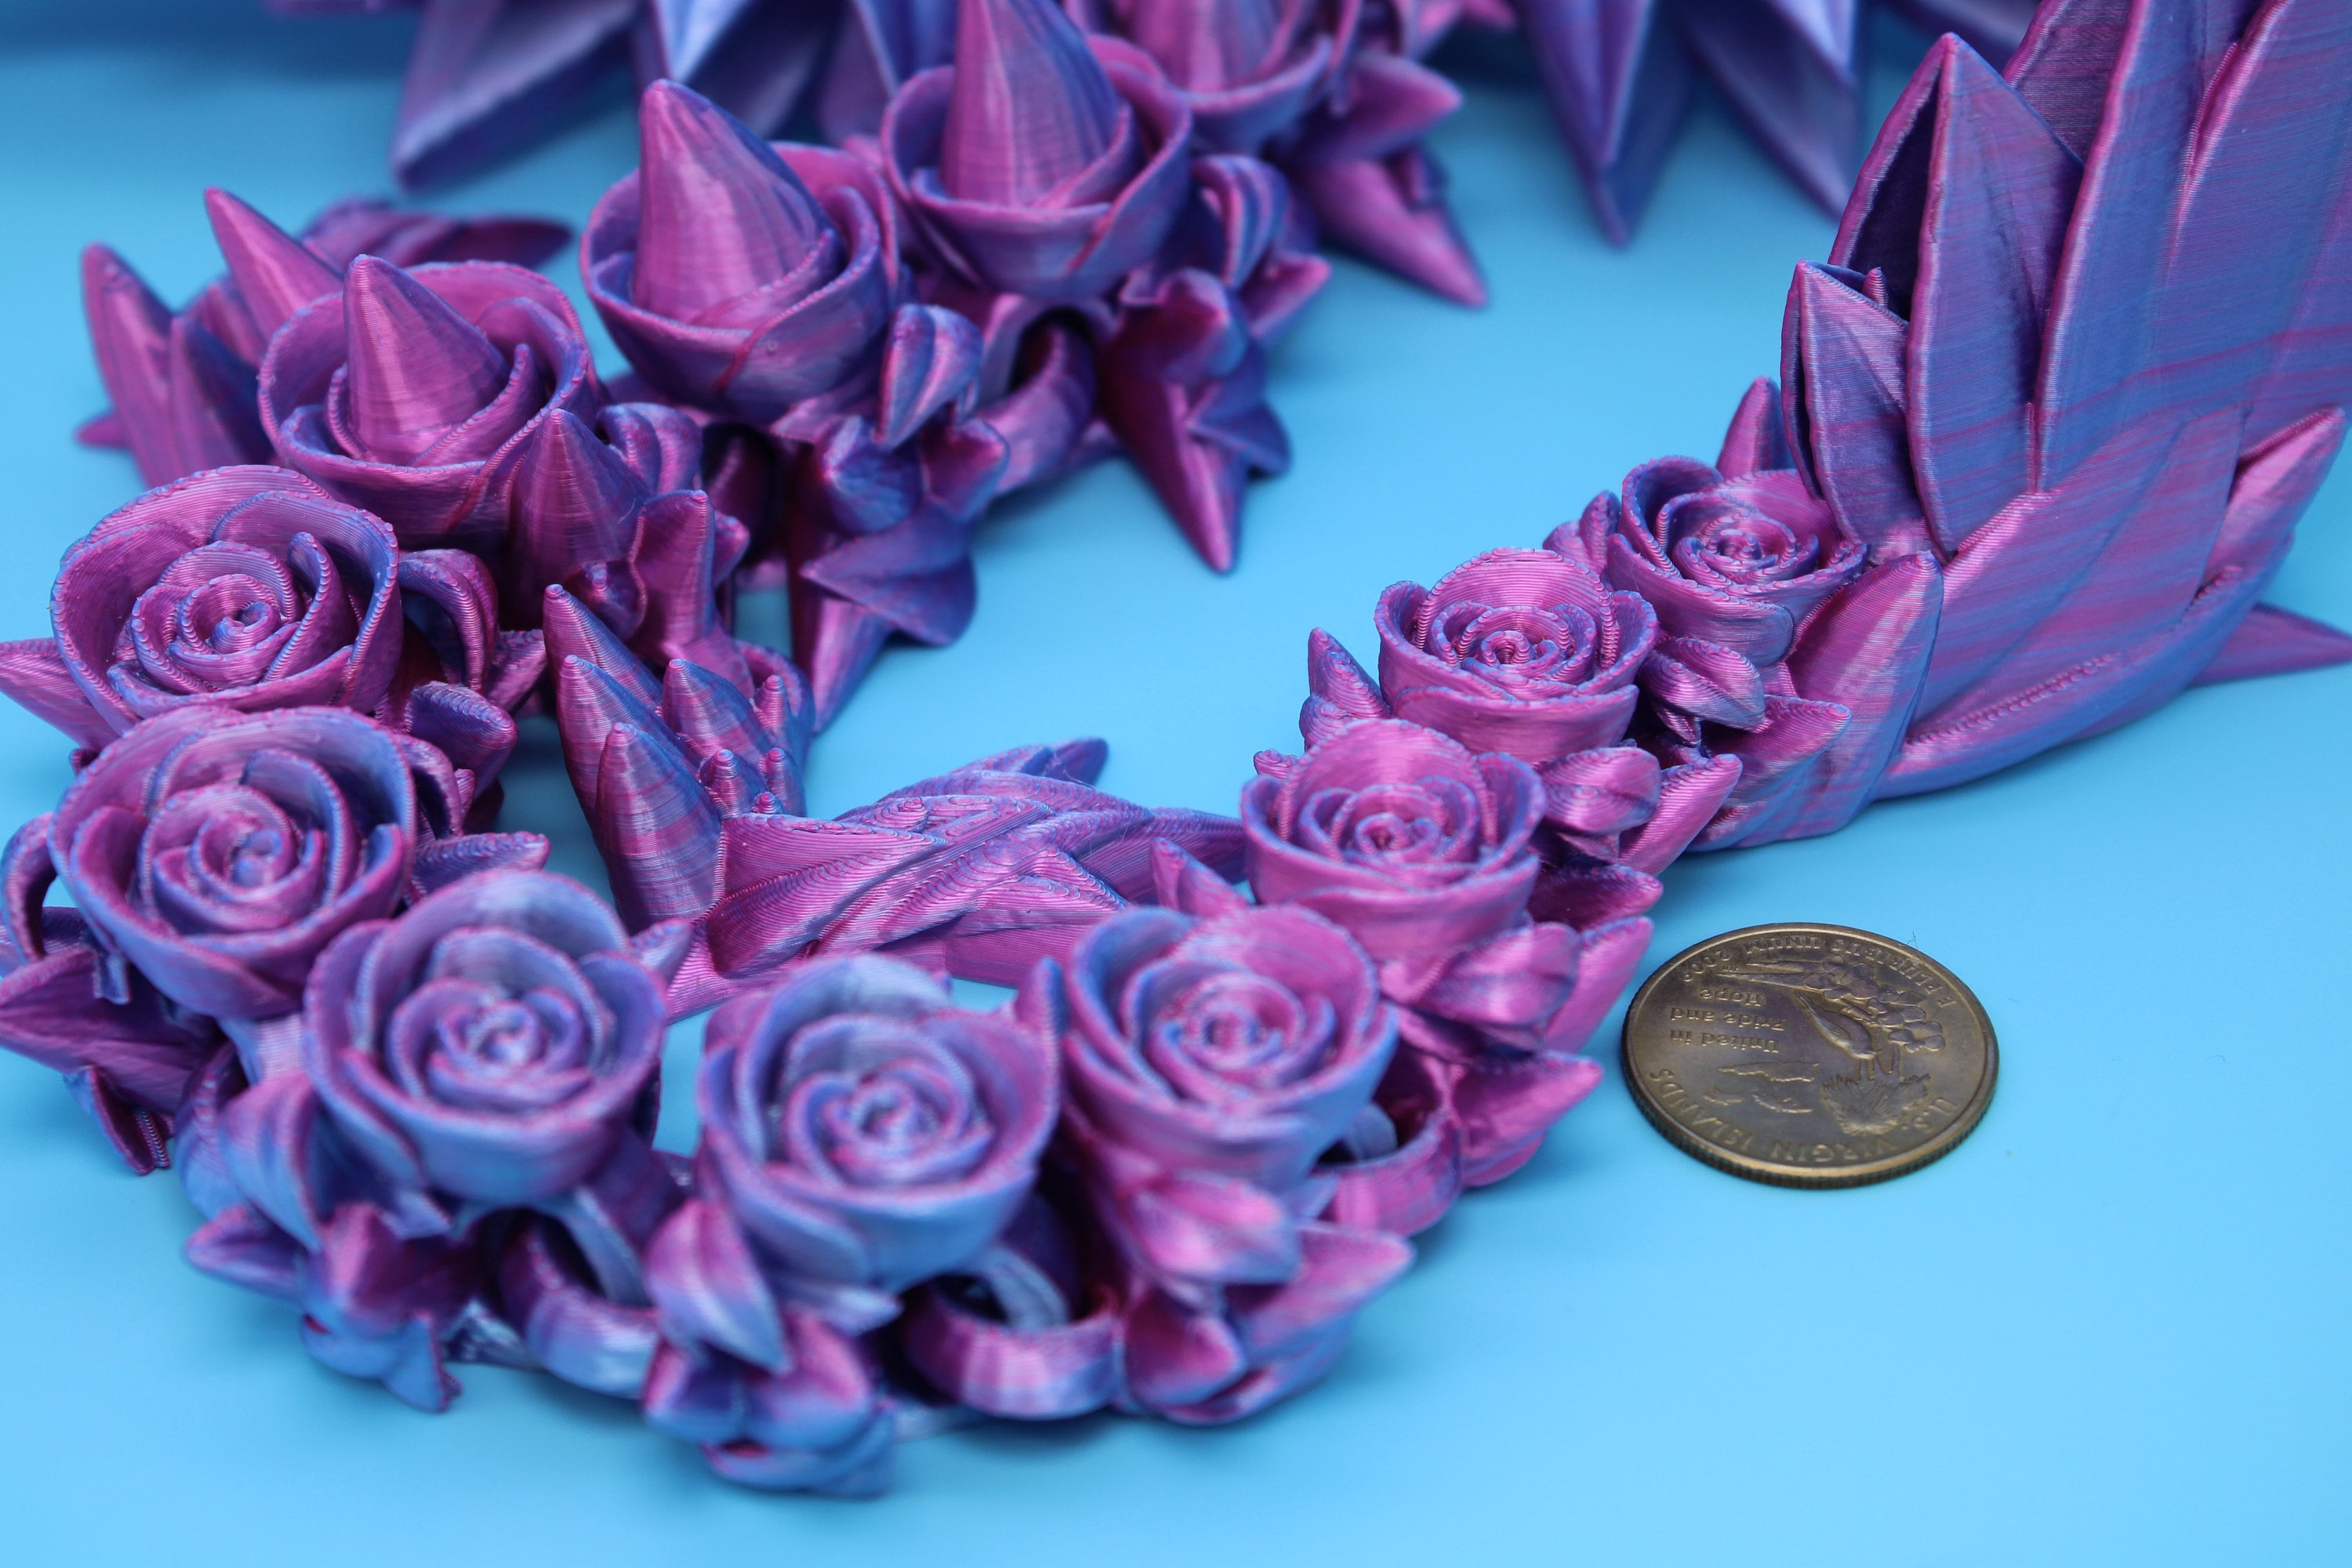 Rose Wing Dragon- Pink & Blue | Articulating Dragon | 3D Printed Fidget | 19 in.